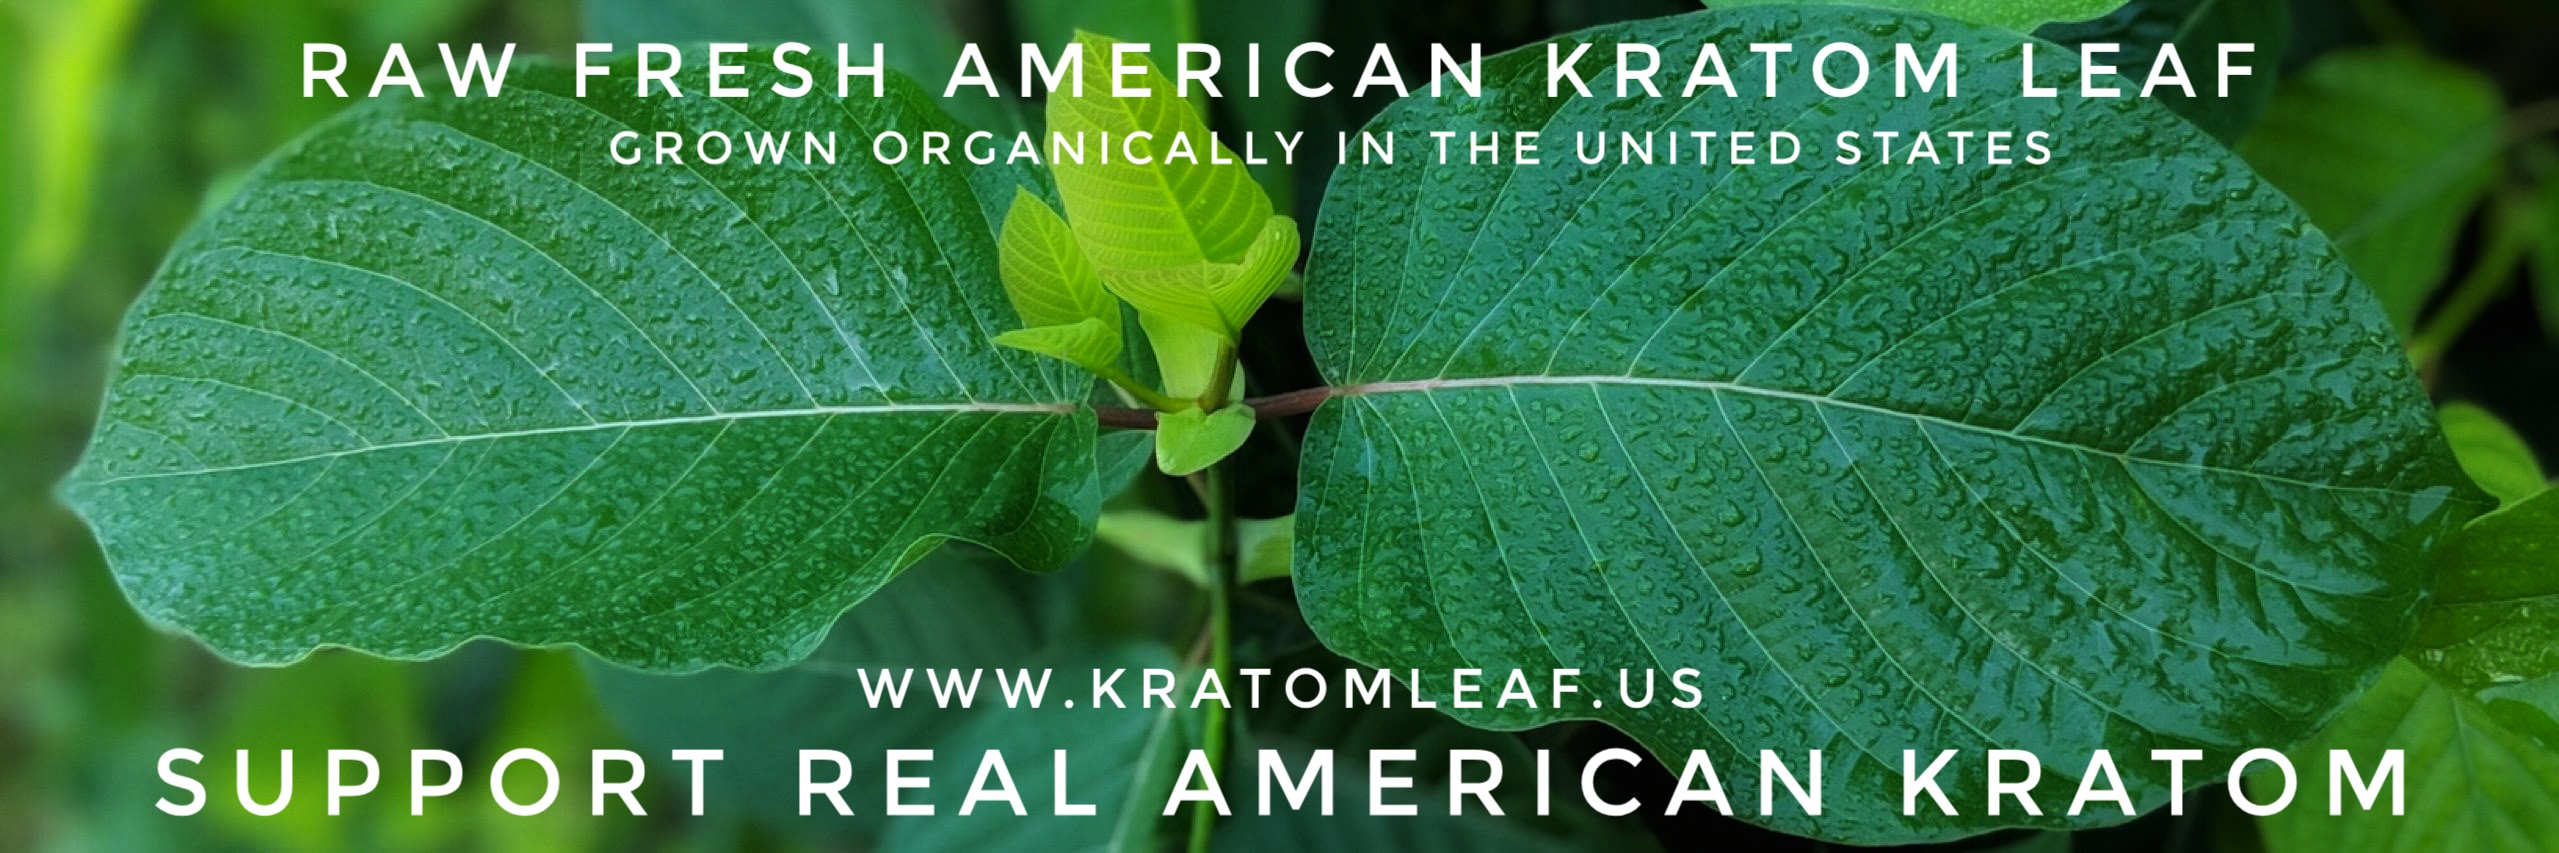 Where to buy fresh kratom leaf? American Kratom